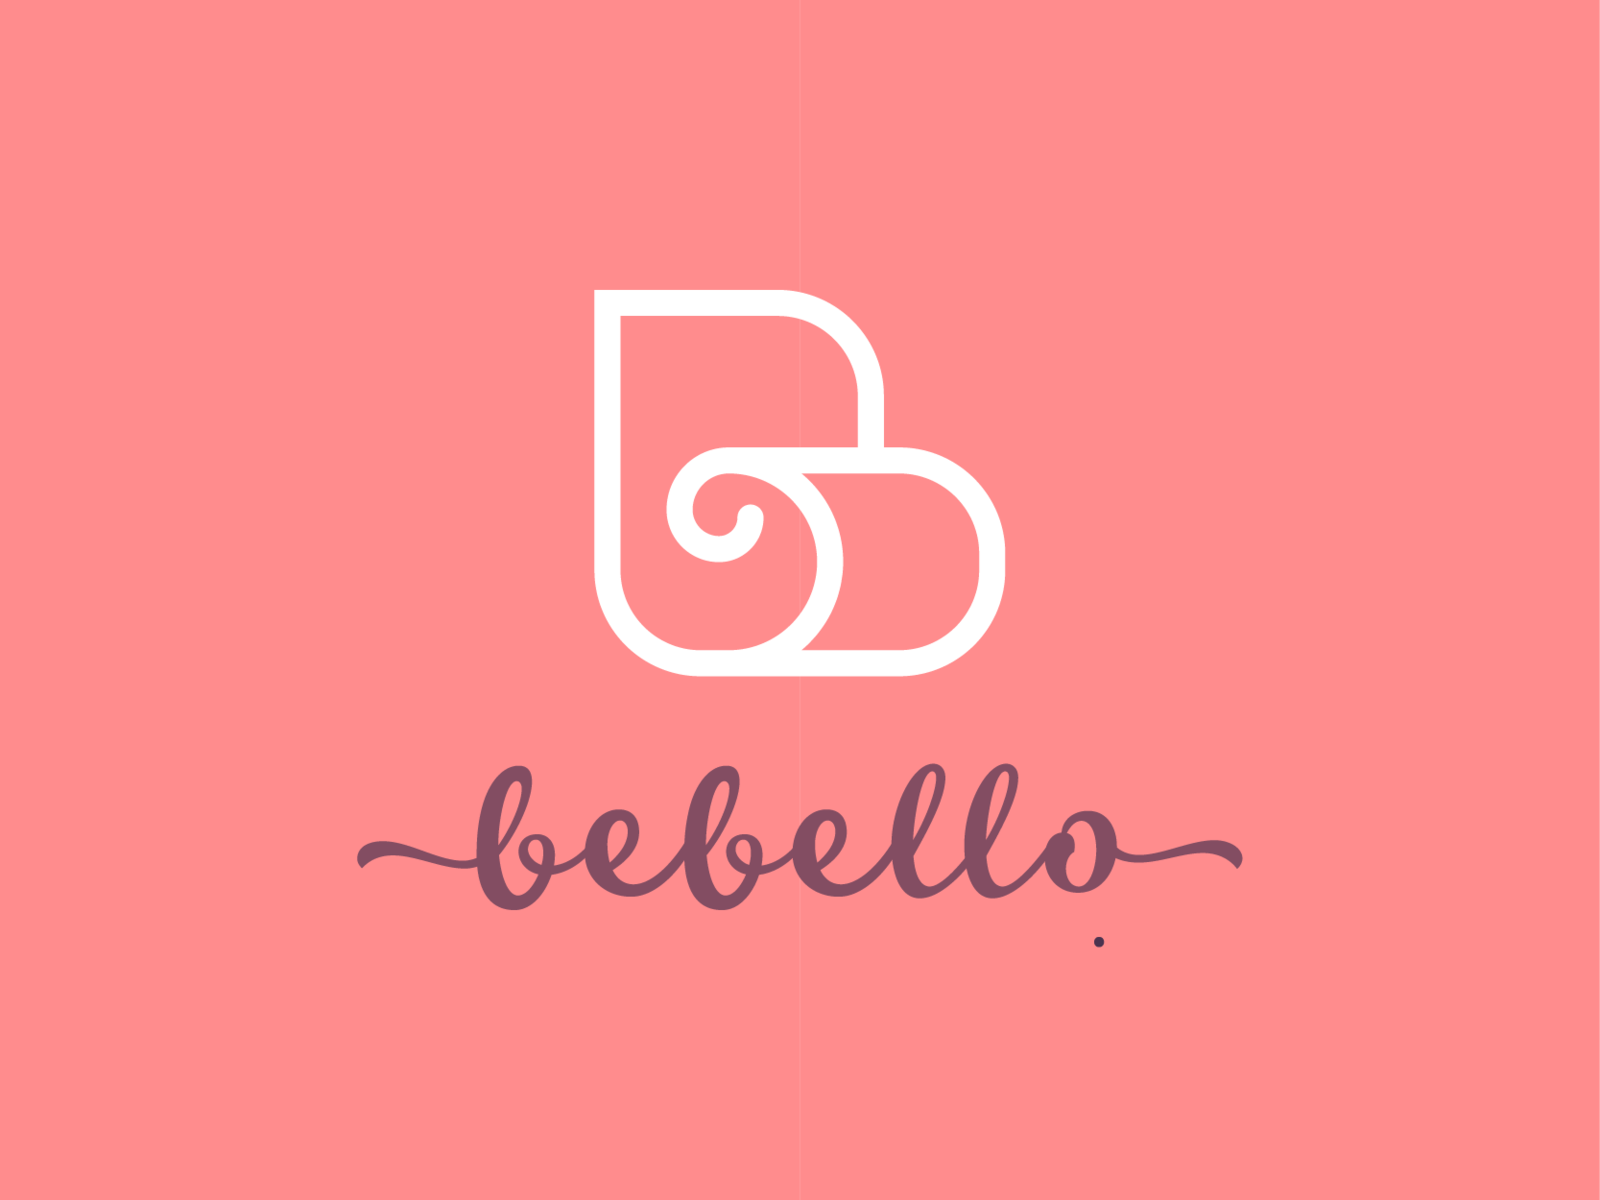 Bebello by minimalab.design on Dribbble